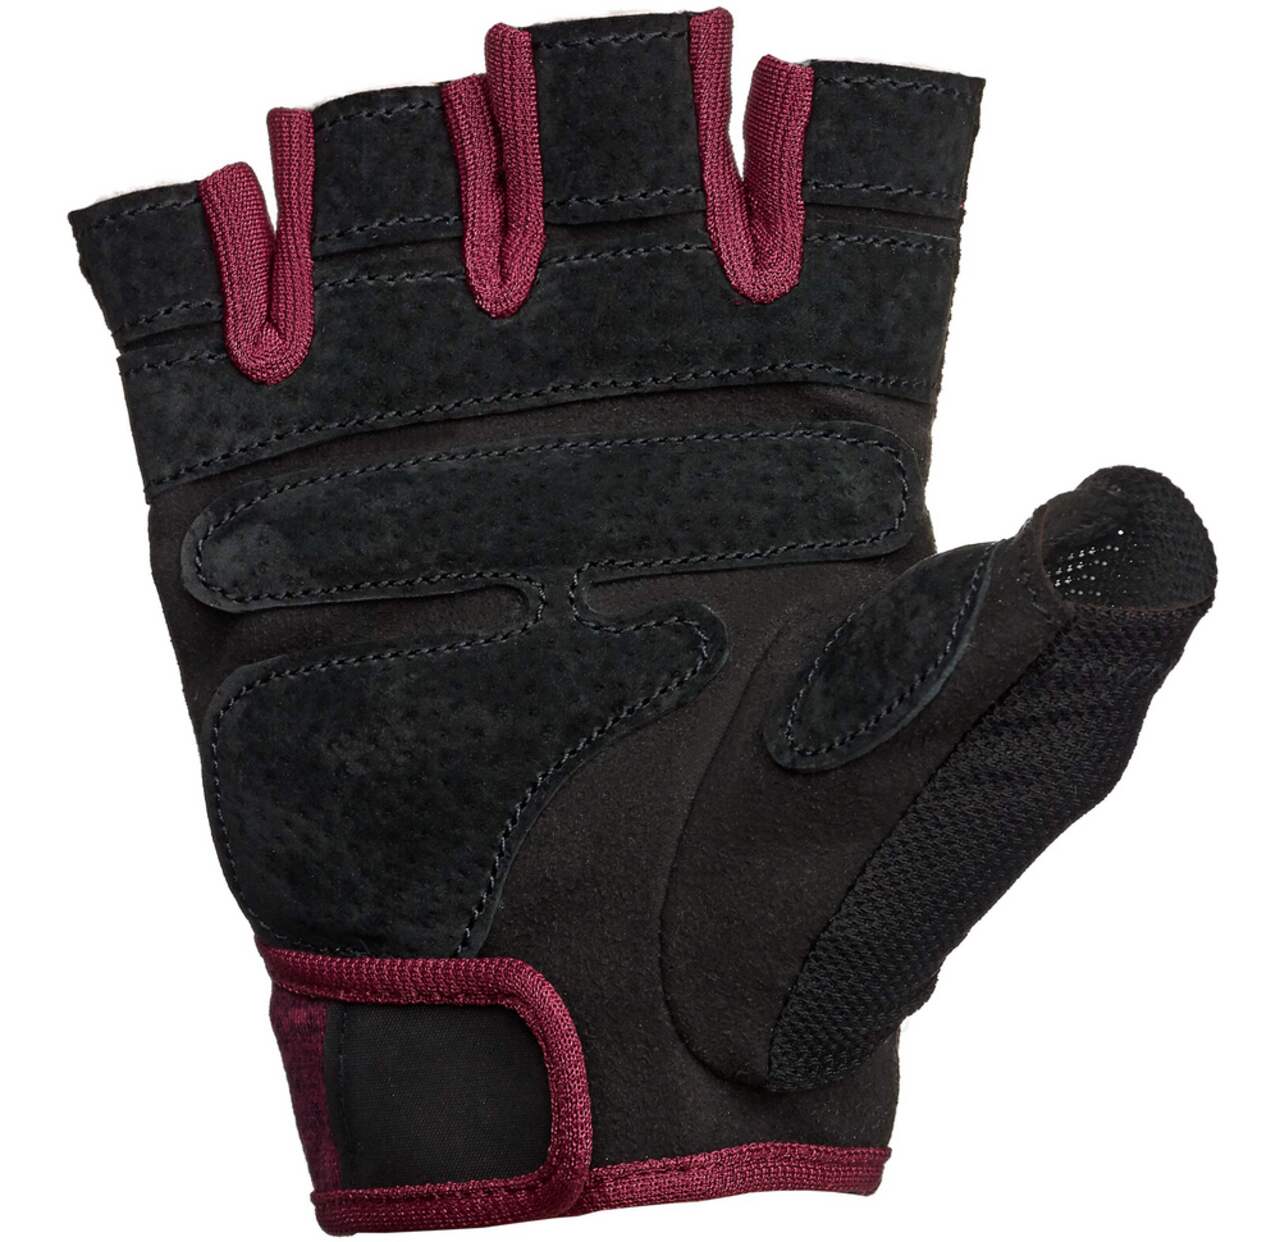 Harbinger Women's FlexFit Powerlifting Glove, Merlot, Pair